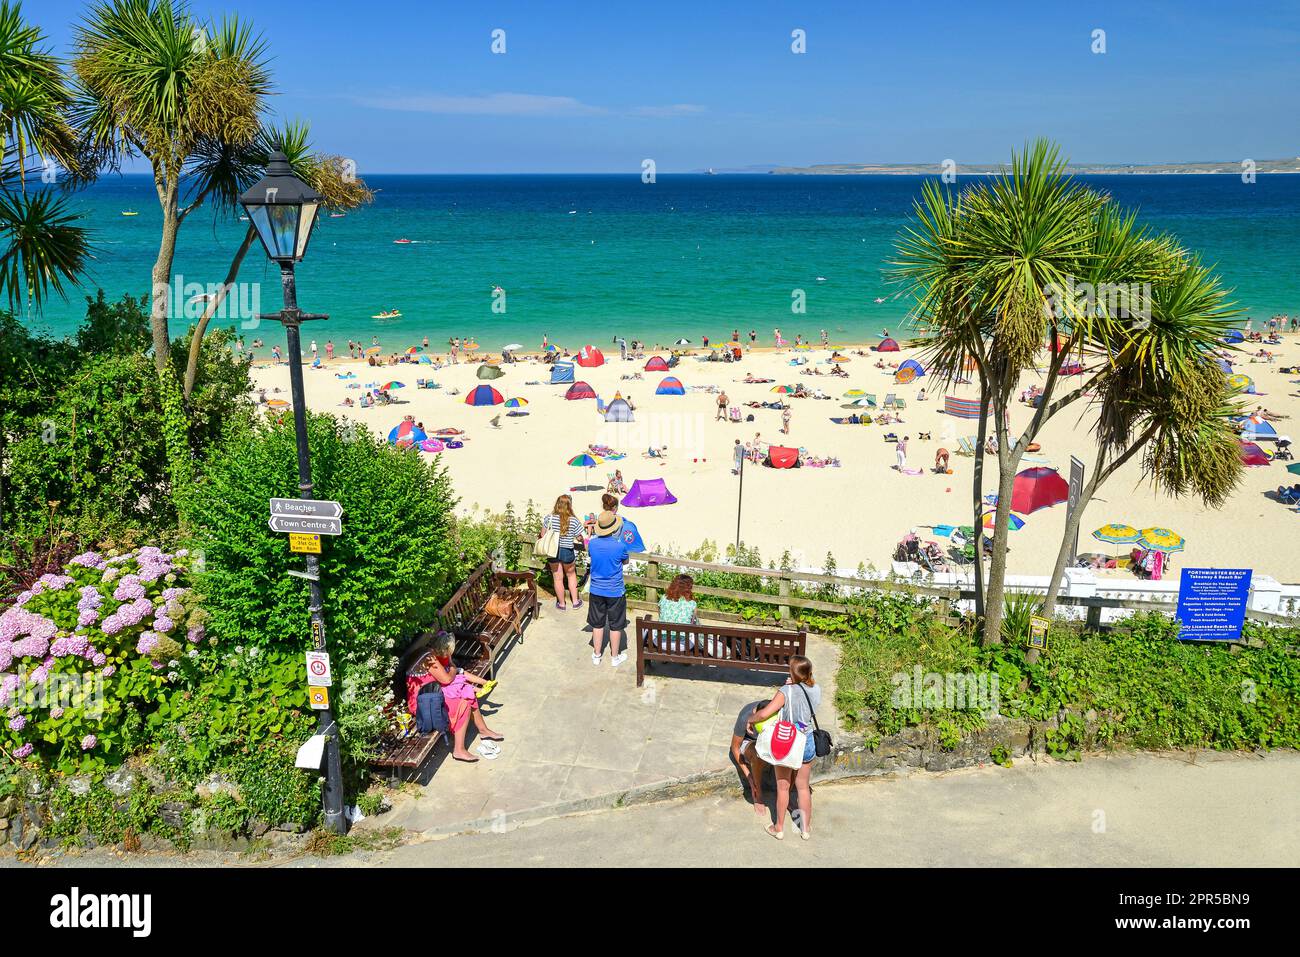 La plage de Porthminster, St Ives, Cornwall, Angleterre, Royaume-Uni Banque D'Images